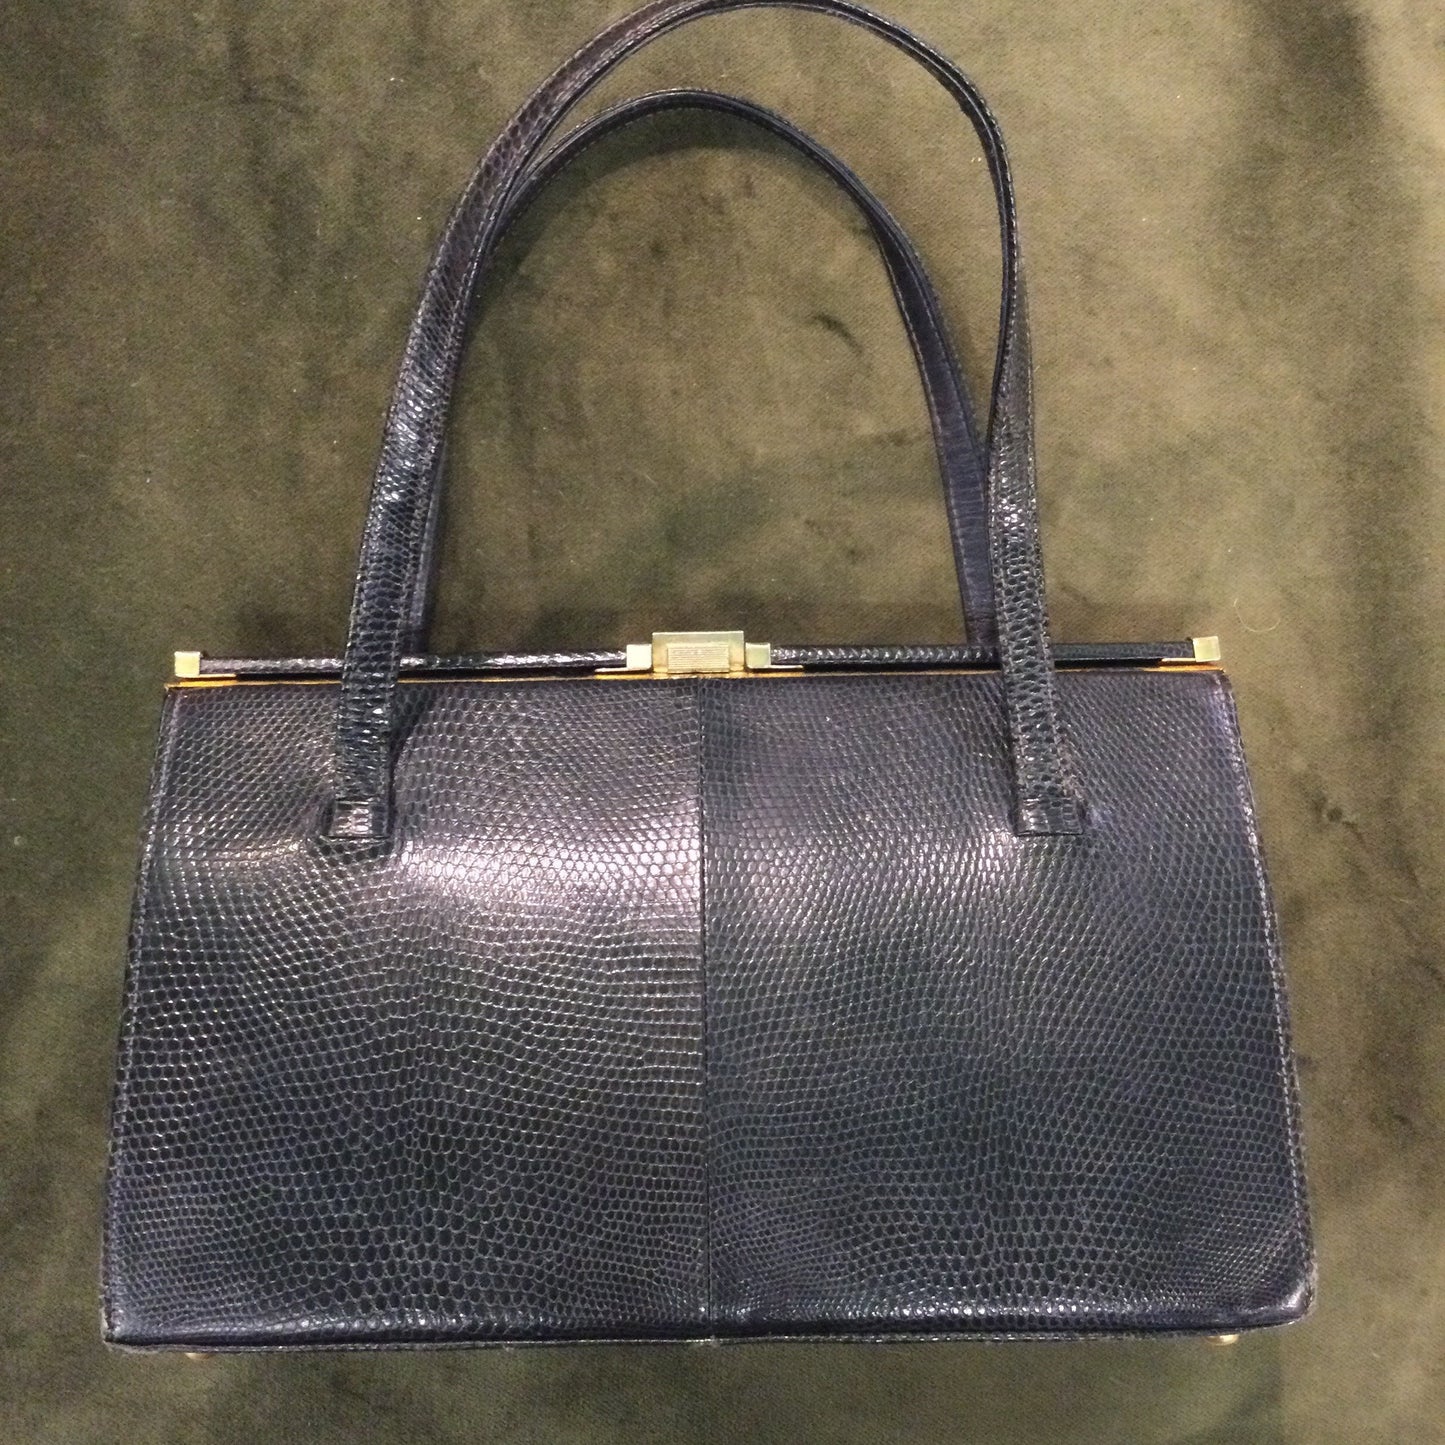 Vintage 1970s Black Leather ‘mock lizard ‘ handbag